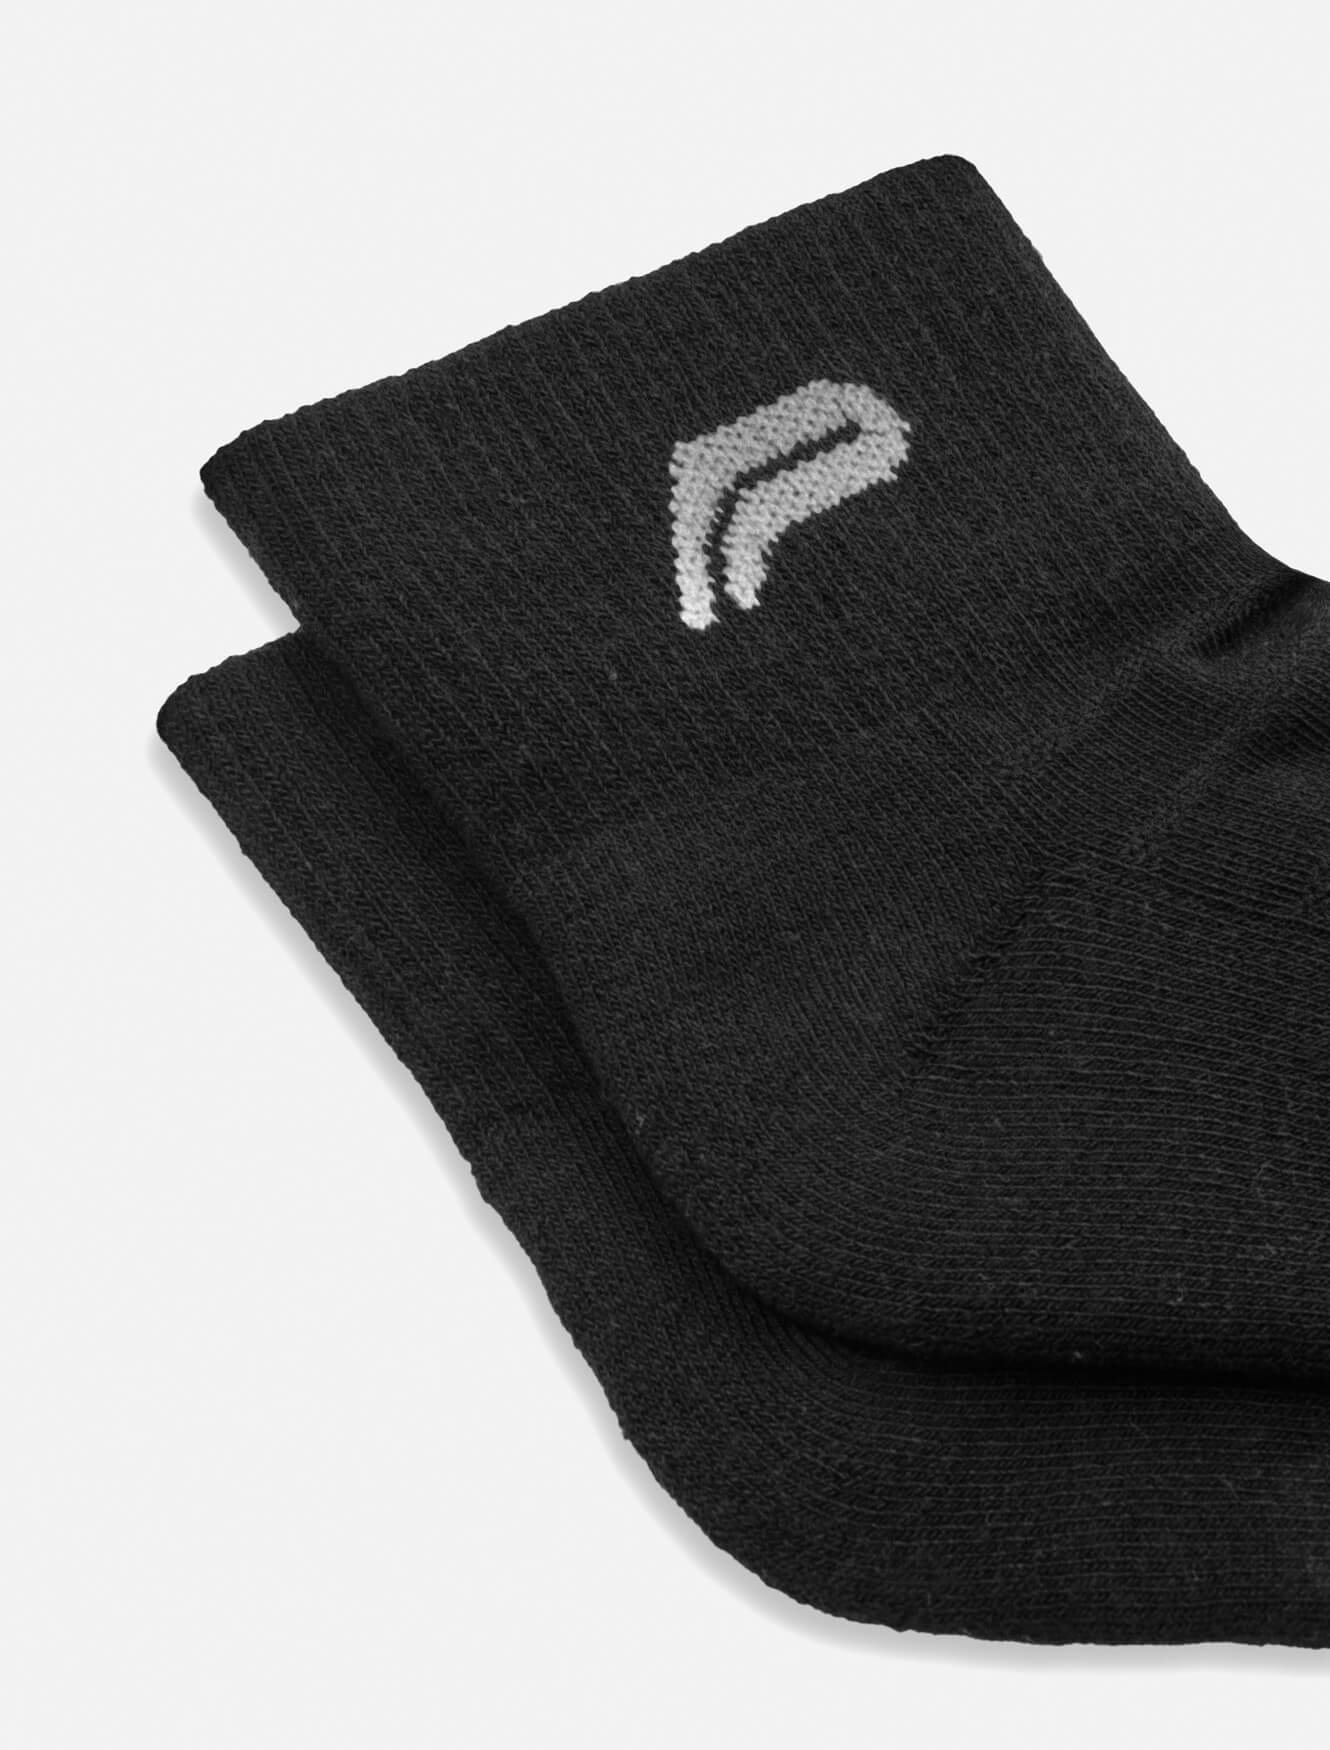 Premium Cushioned Running Socks / Black Pursue Fitness 3